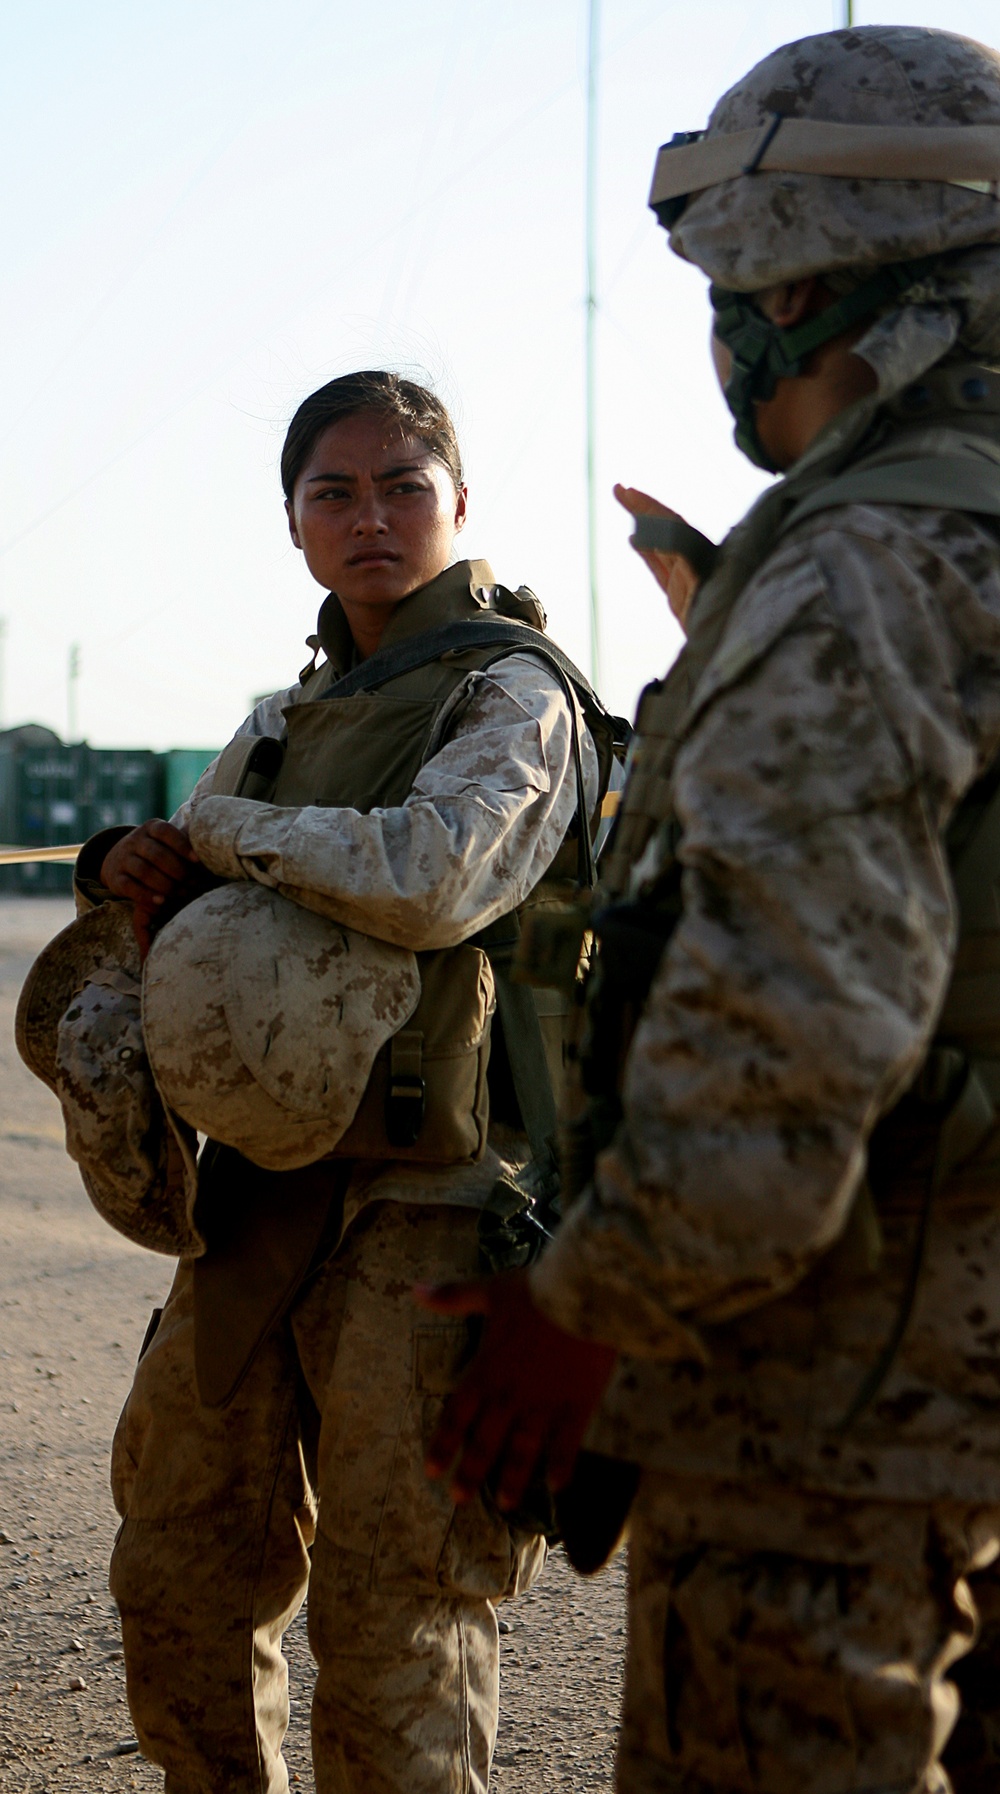 Communications Company Marines solidify their bond